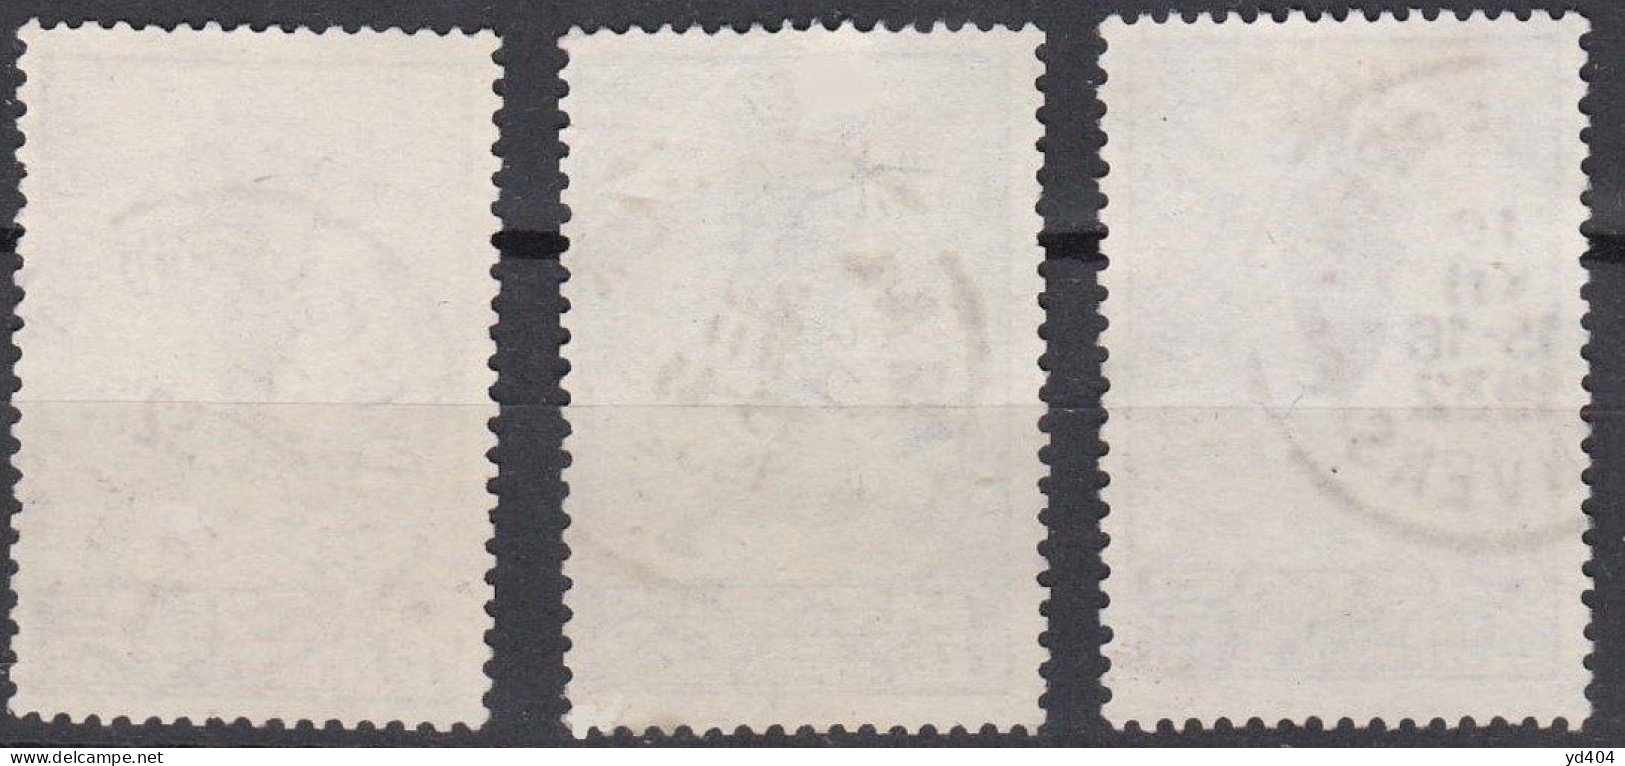 BE032B – BELGIQUE - BELGIUM – 1932 – PICCARD’S STRATOSPHERE BALLOON – SG # 621/3 USED 24 € - Gebraucht